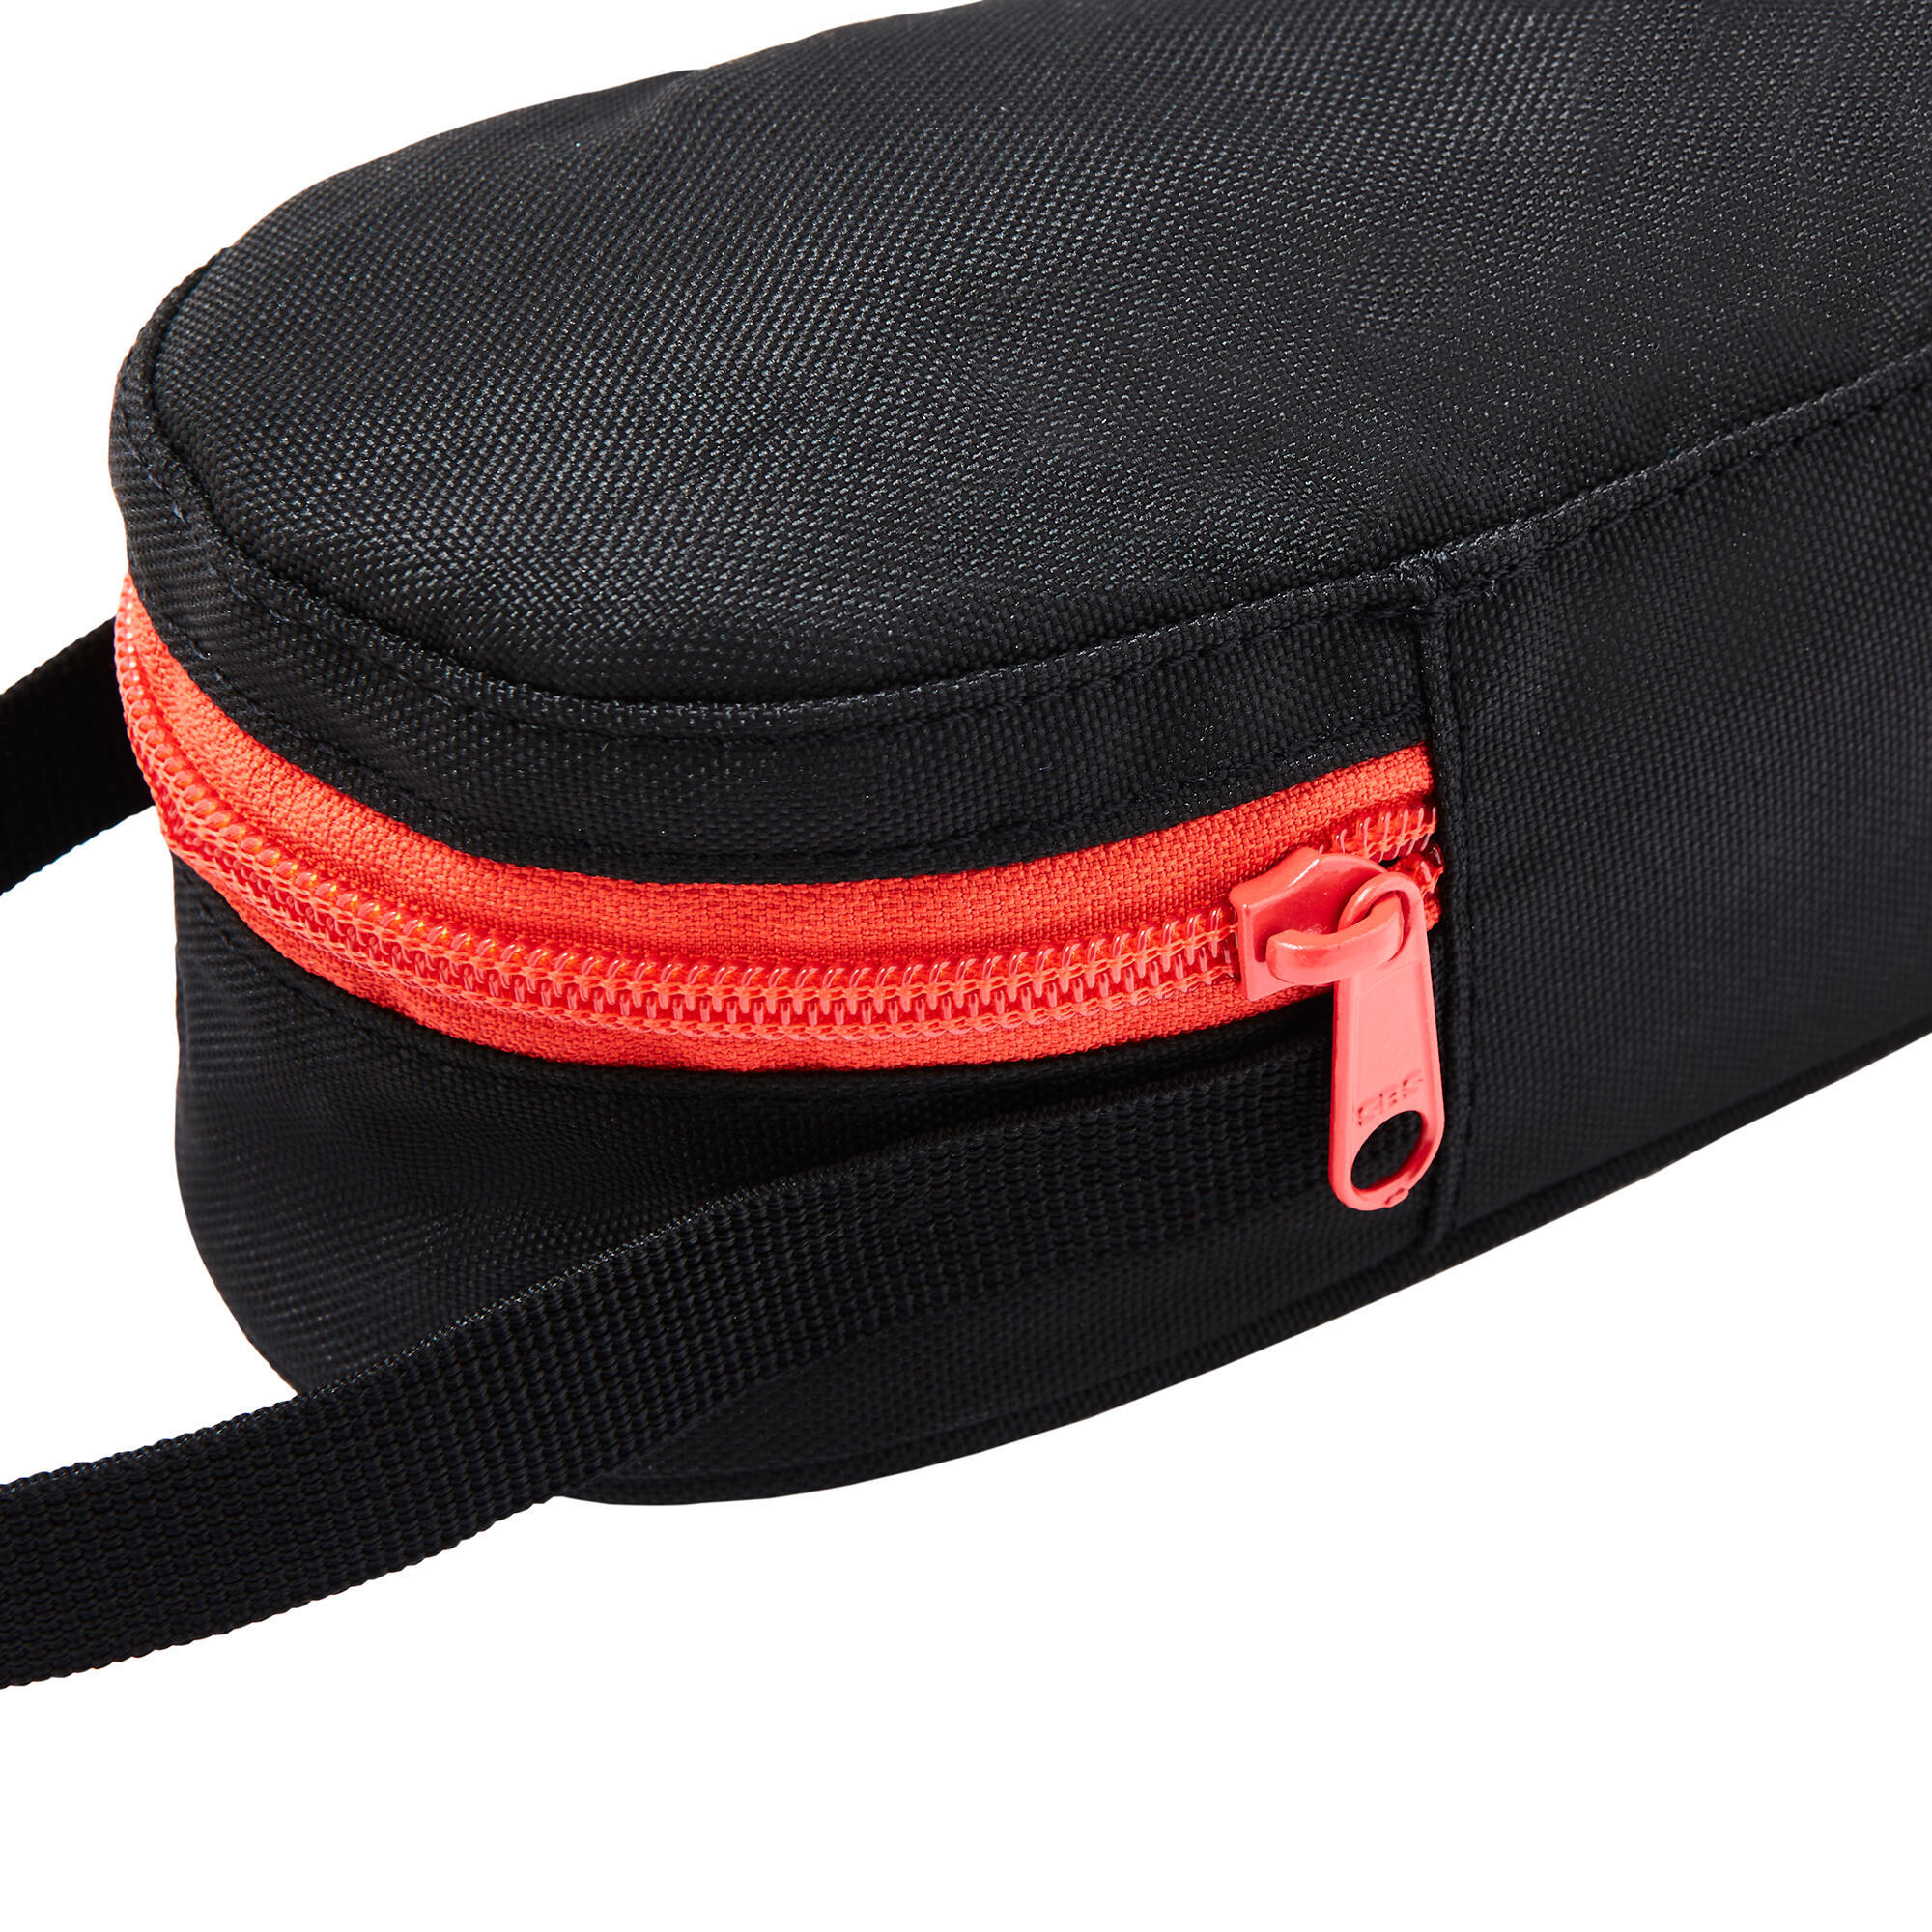 Soft Bag for 3 Petanque Boules - Black/Red 2/2